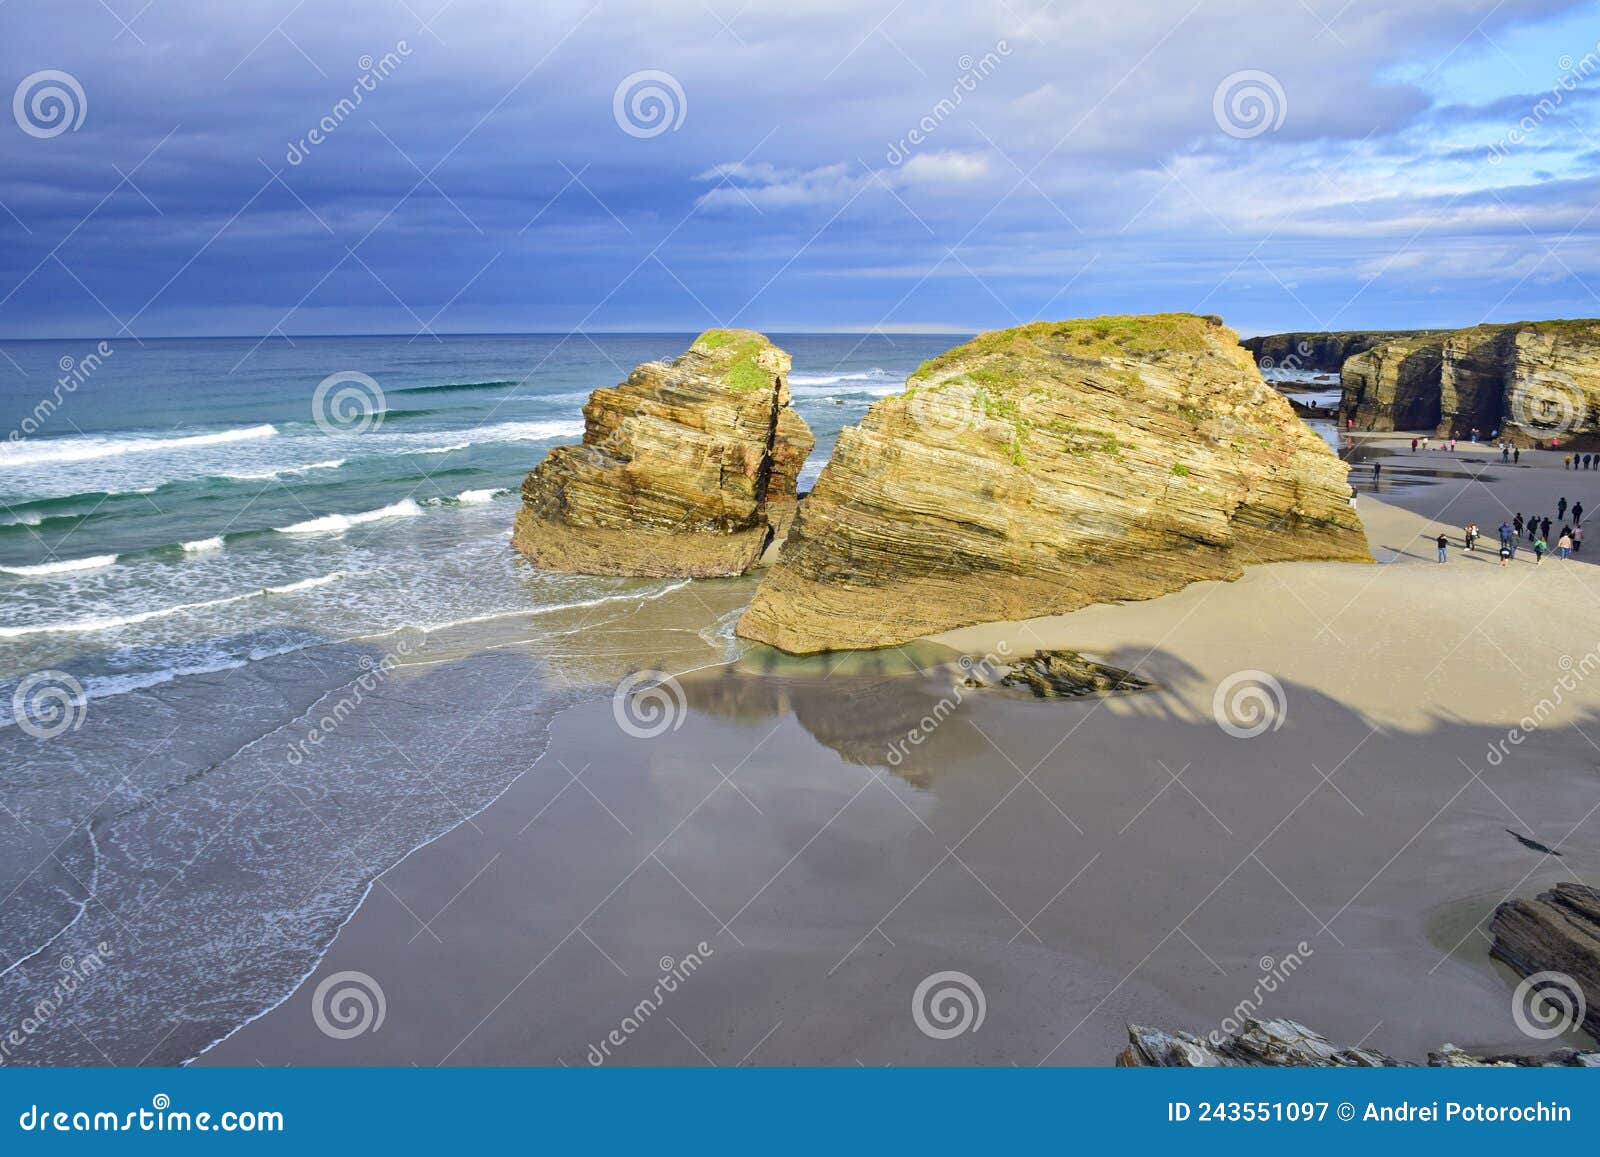 rocks on a sandy beach. praia de augas santas, ribadeo